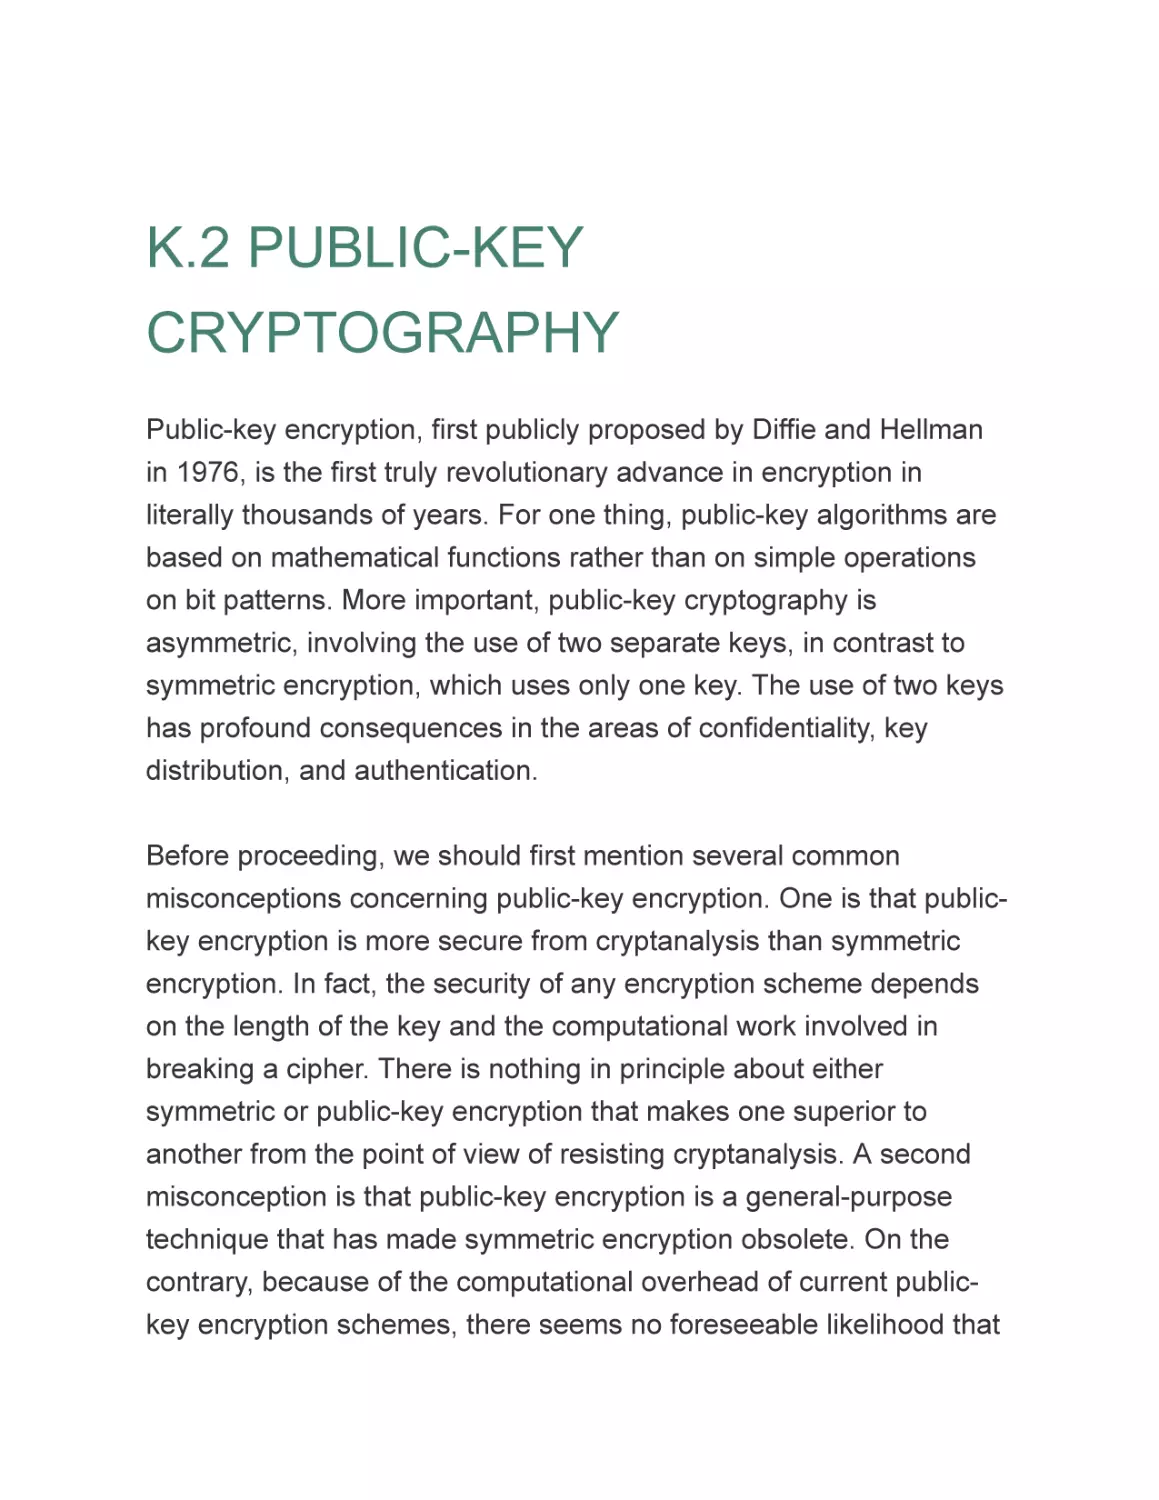 K.2 PUBLIC-KEY CRYPTOGRAPHY